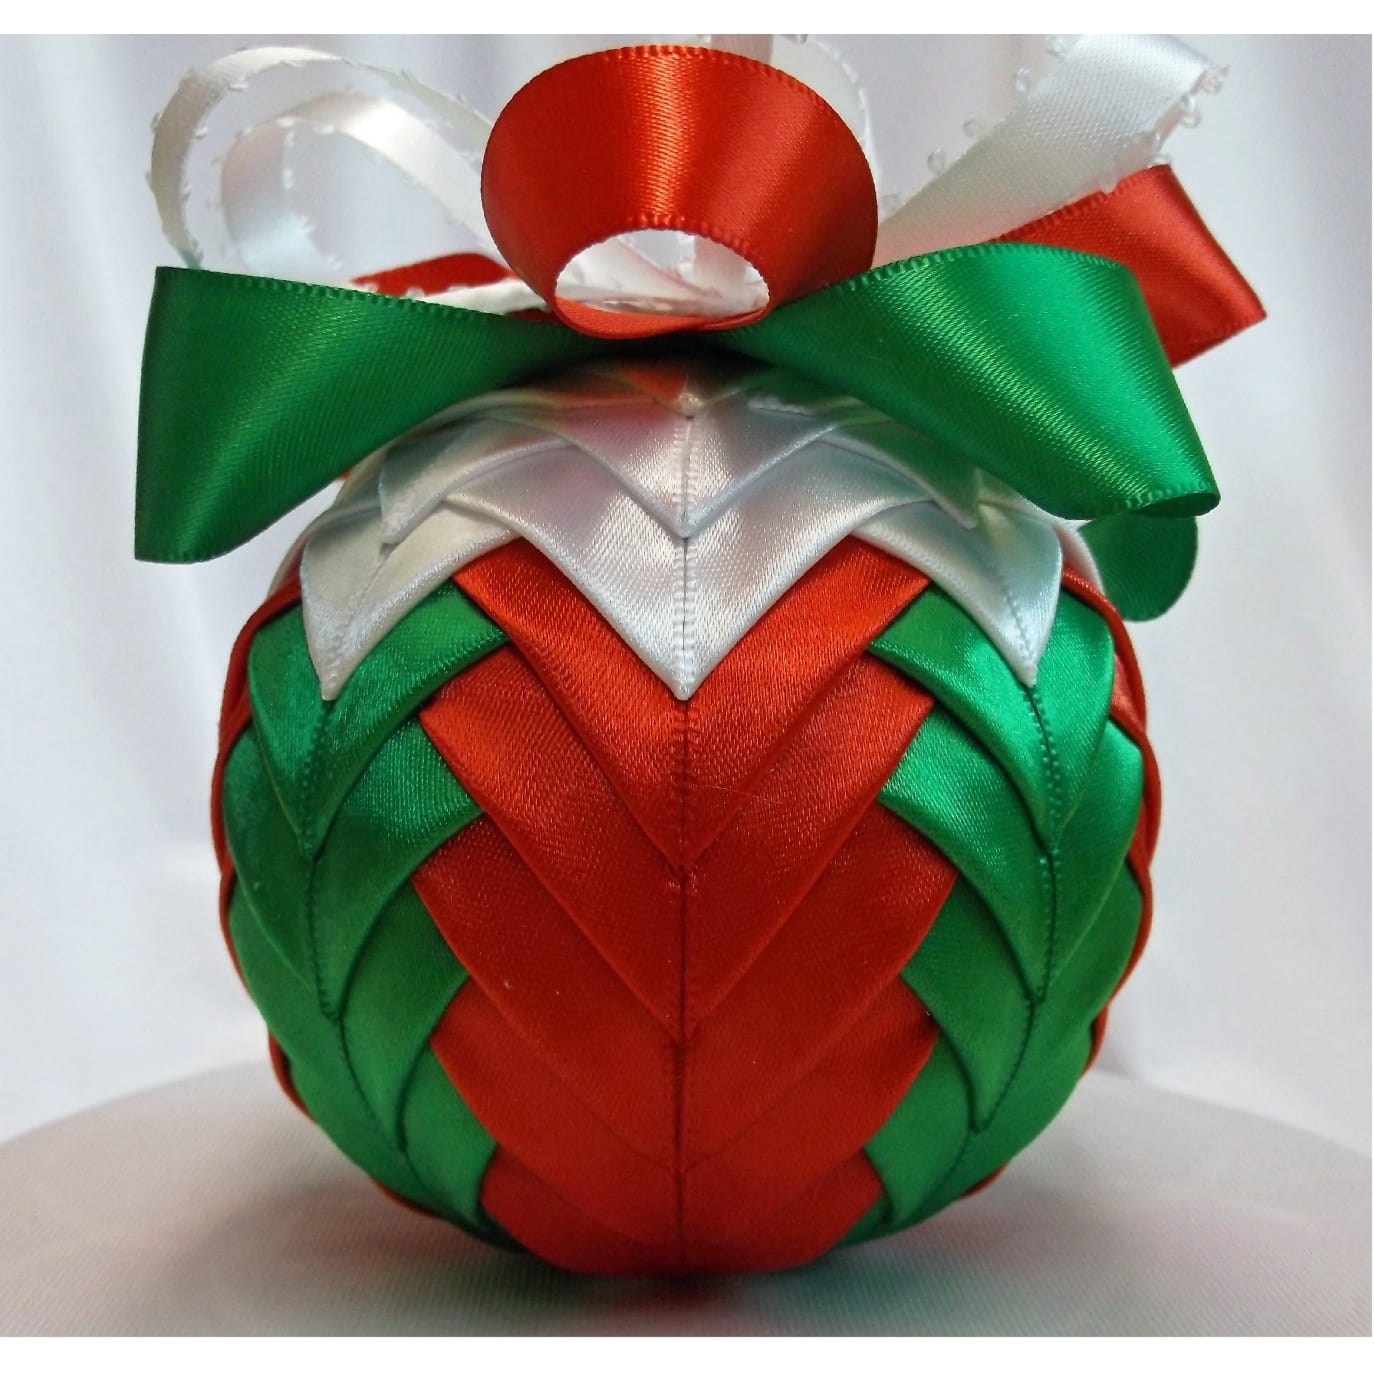 Christmas Ornament Kit